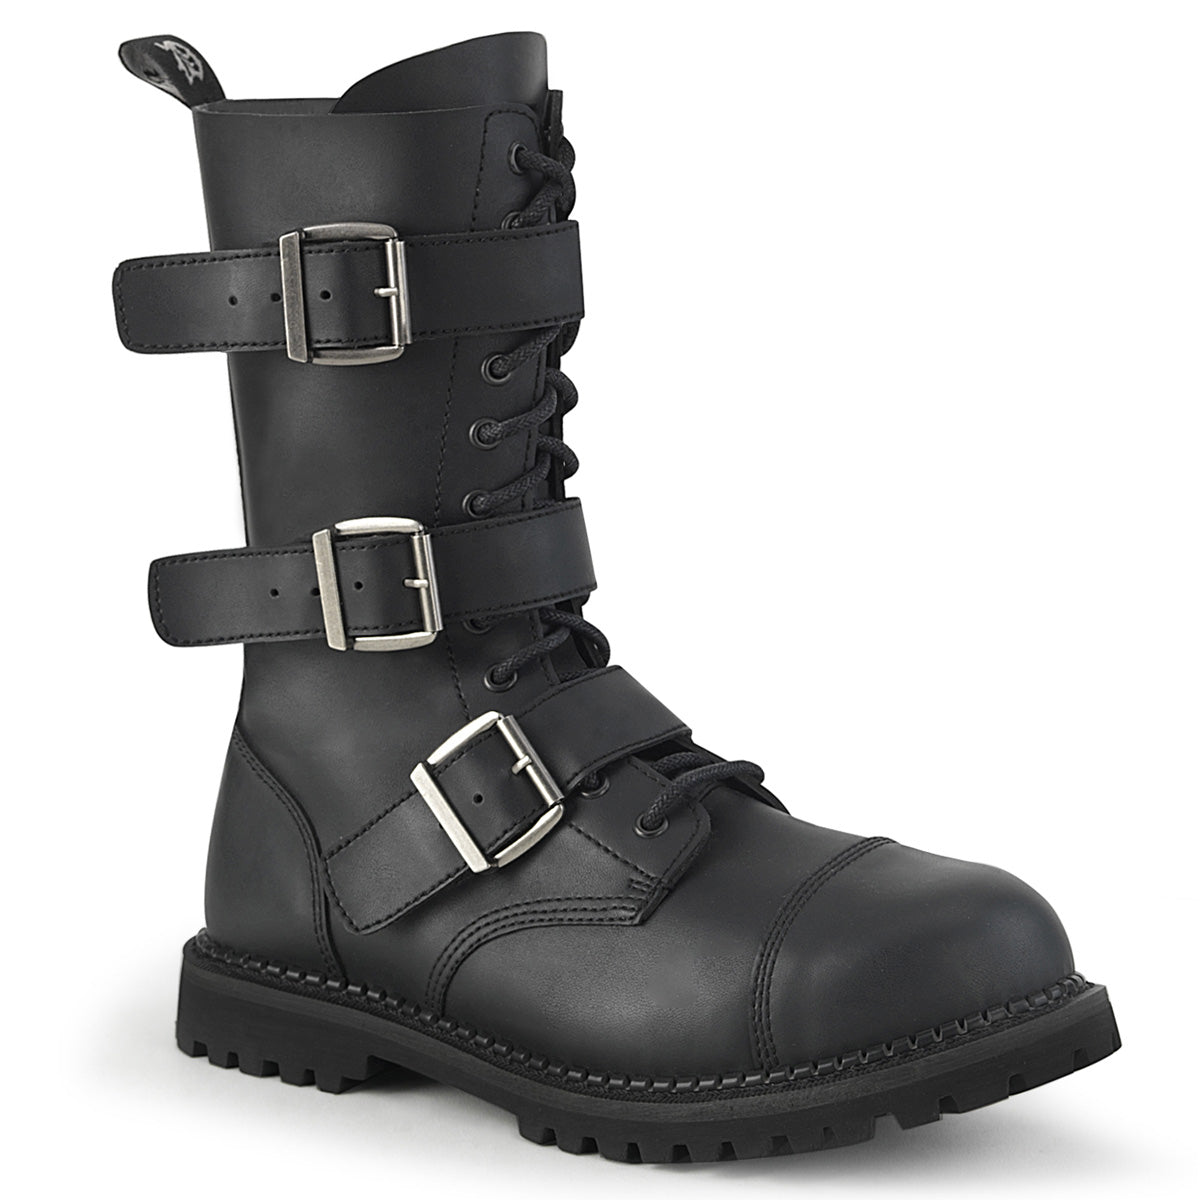 RIOT-12BK Black Ankle Boots